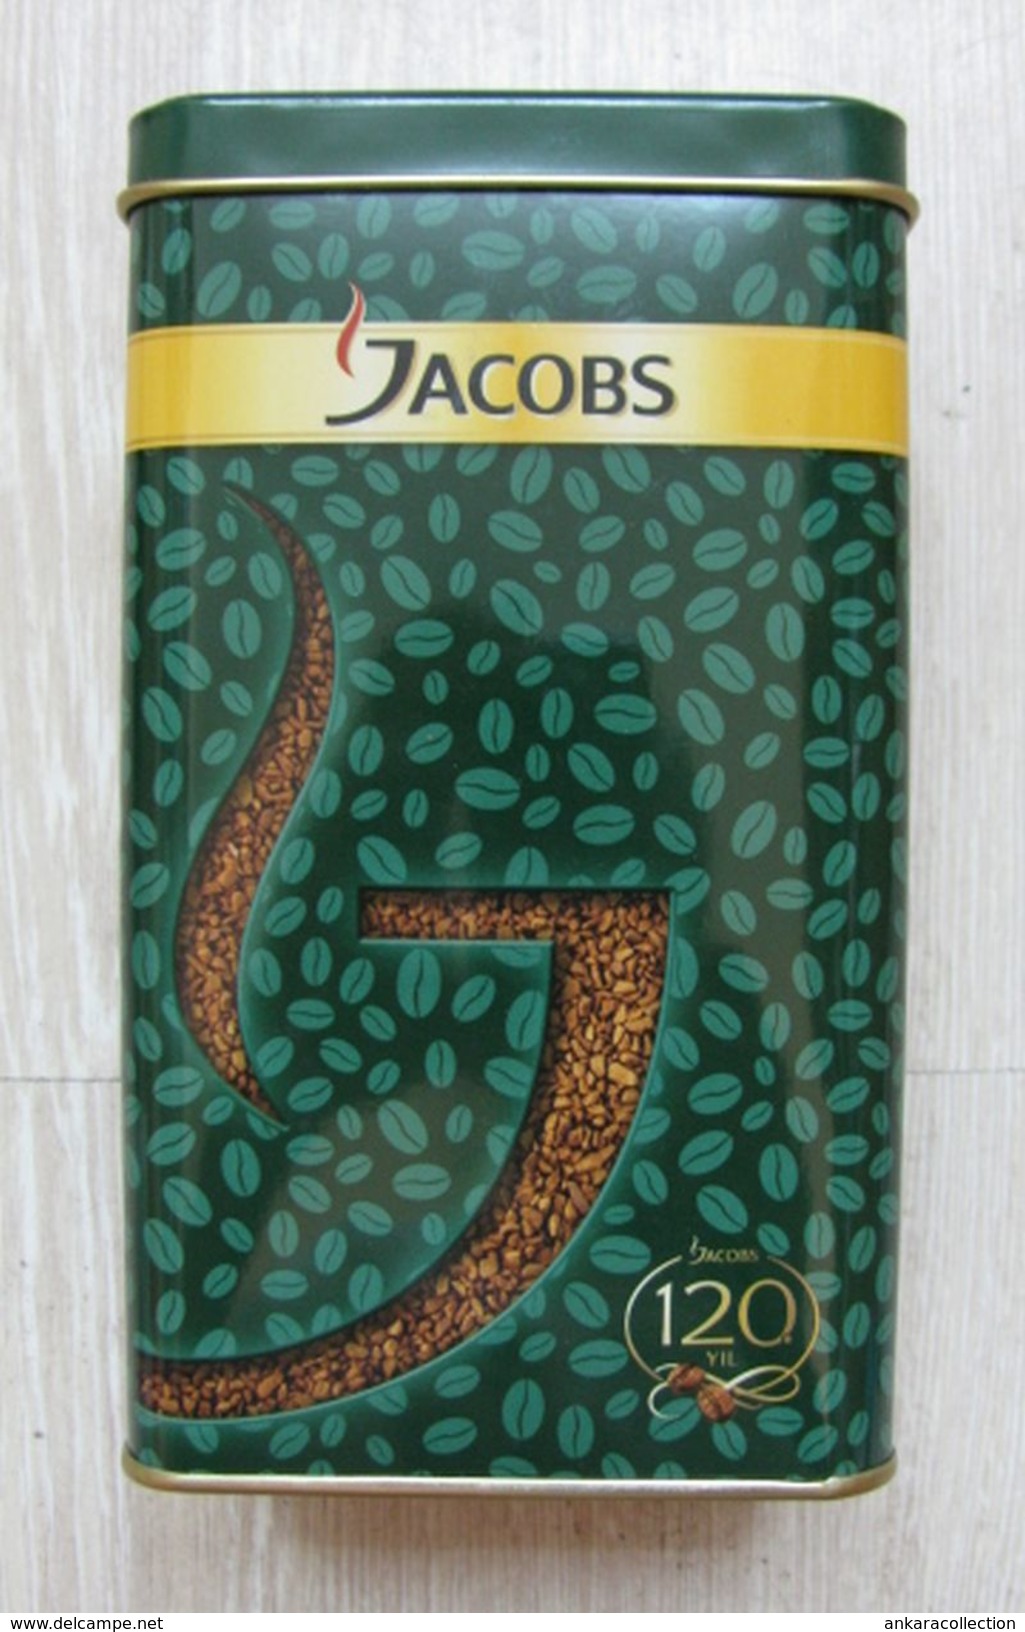 AC - 120th ANNIVERSARY OF JACOBS COFFEE EMPTY TIN BOX - Dozen